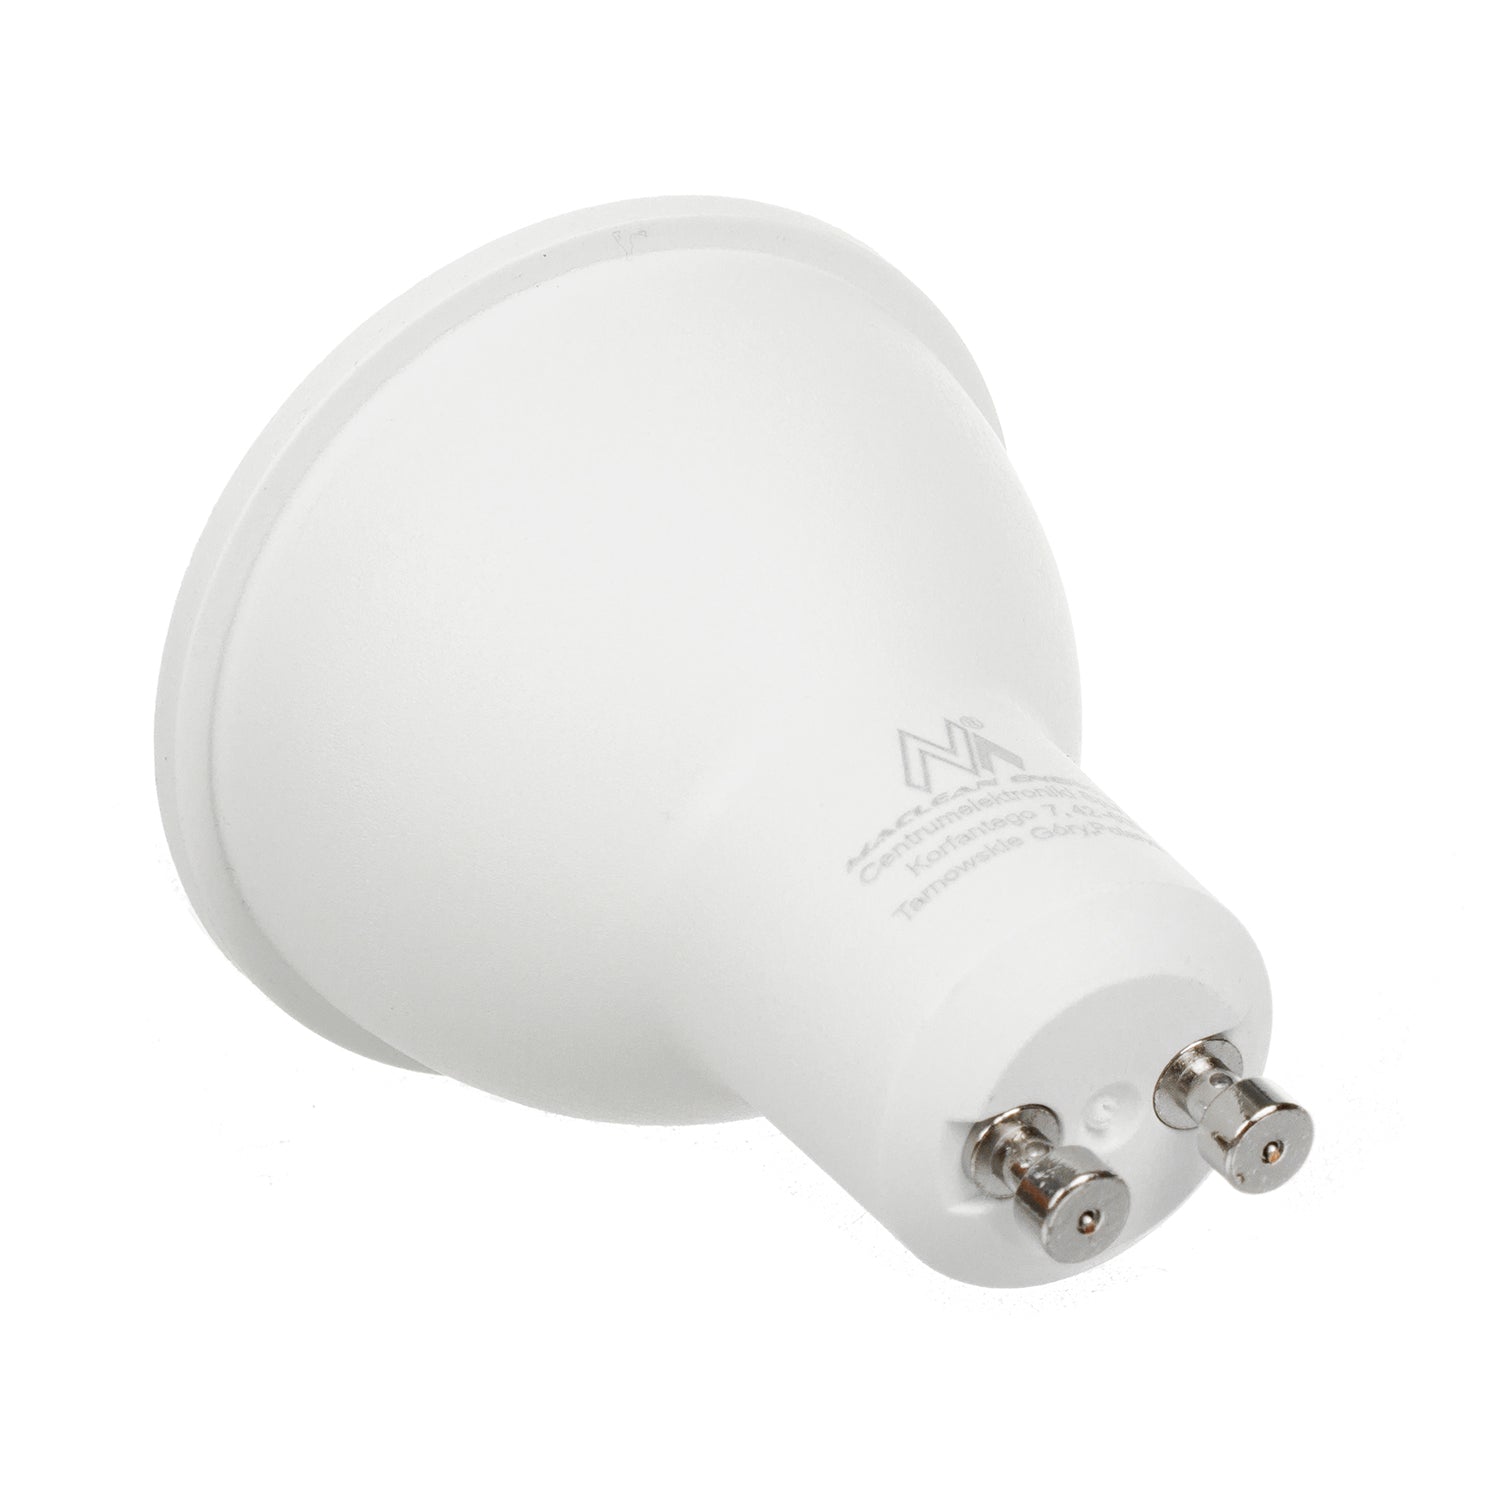 Maclean Energy MCE435 LED Ampoule GU10 5W NW Neutre Blanc 4000K, 220-240V  ~, 50/60Hz, 400 lumens – Euroelectronics EU